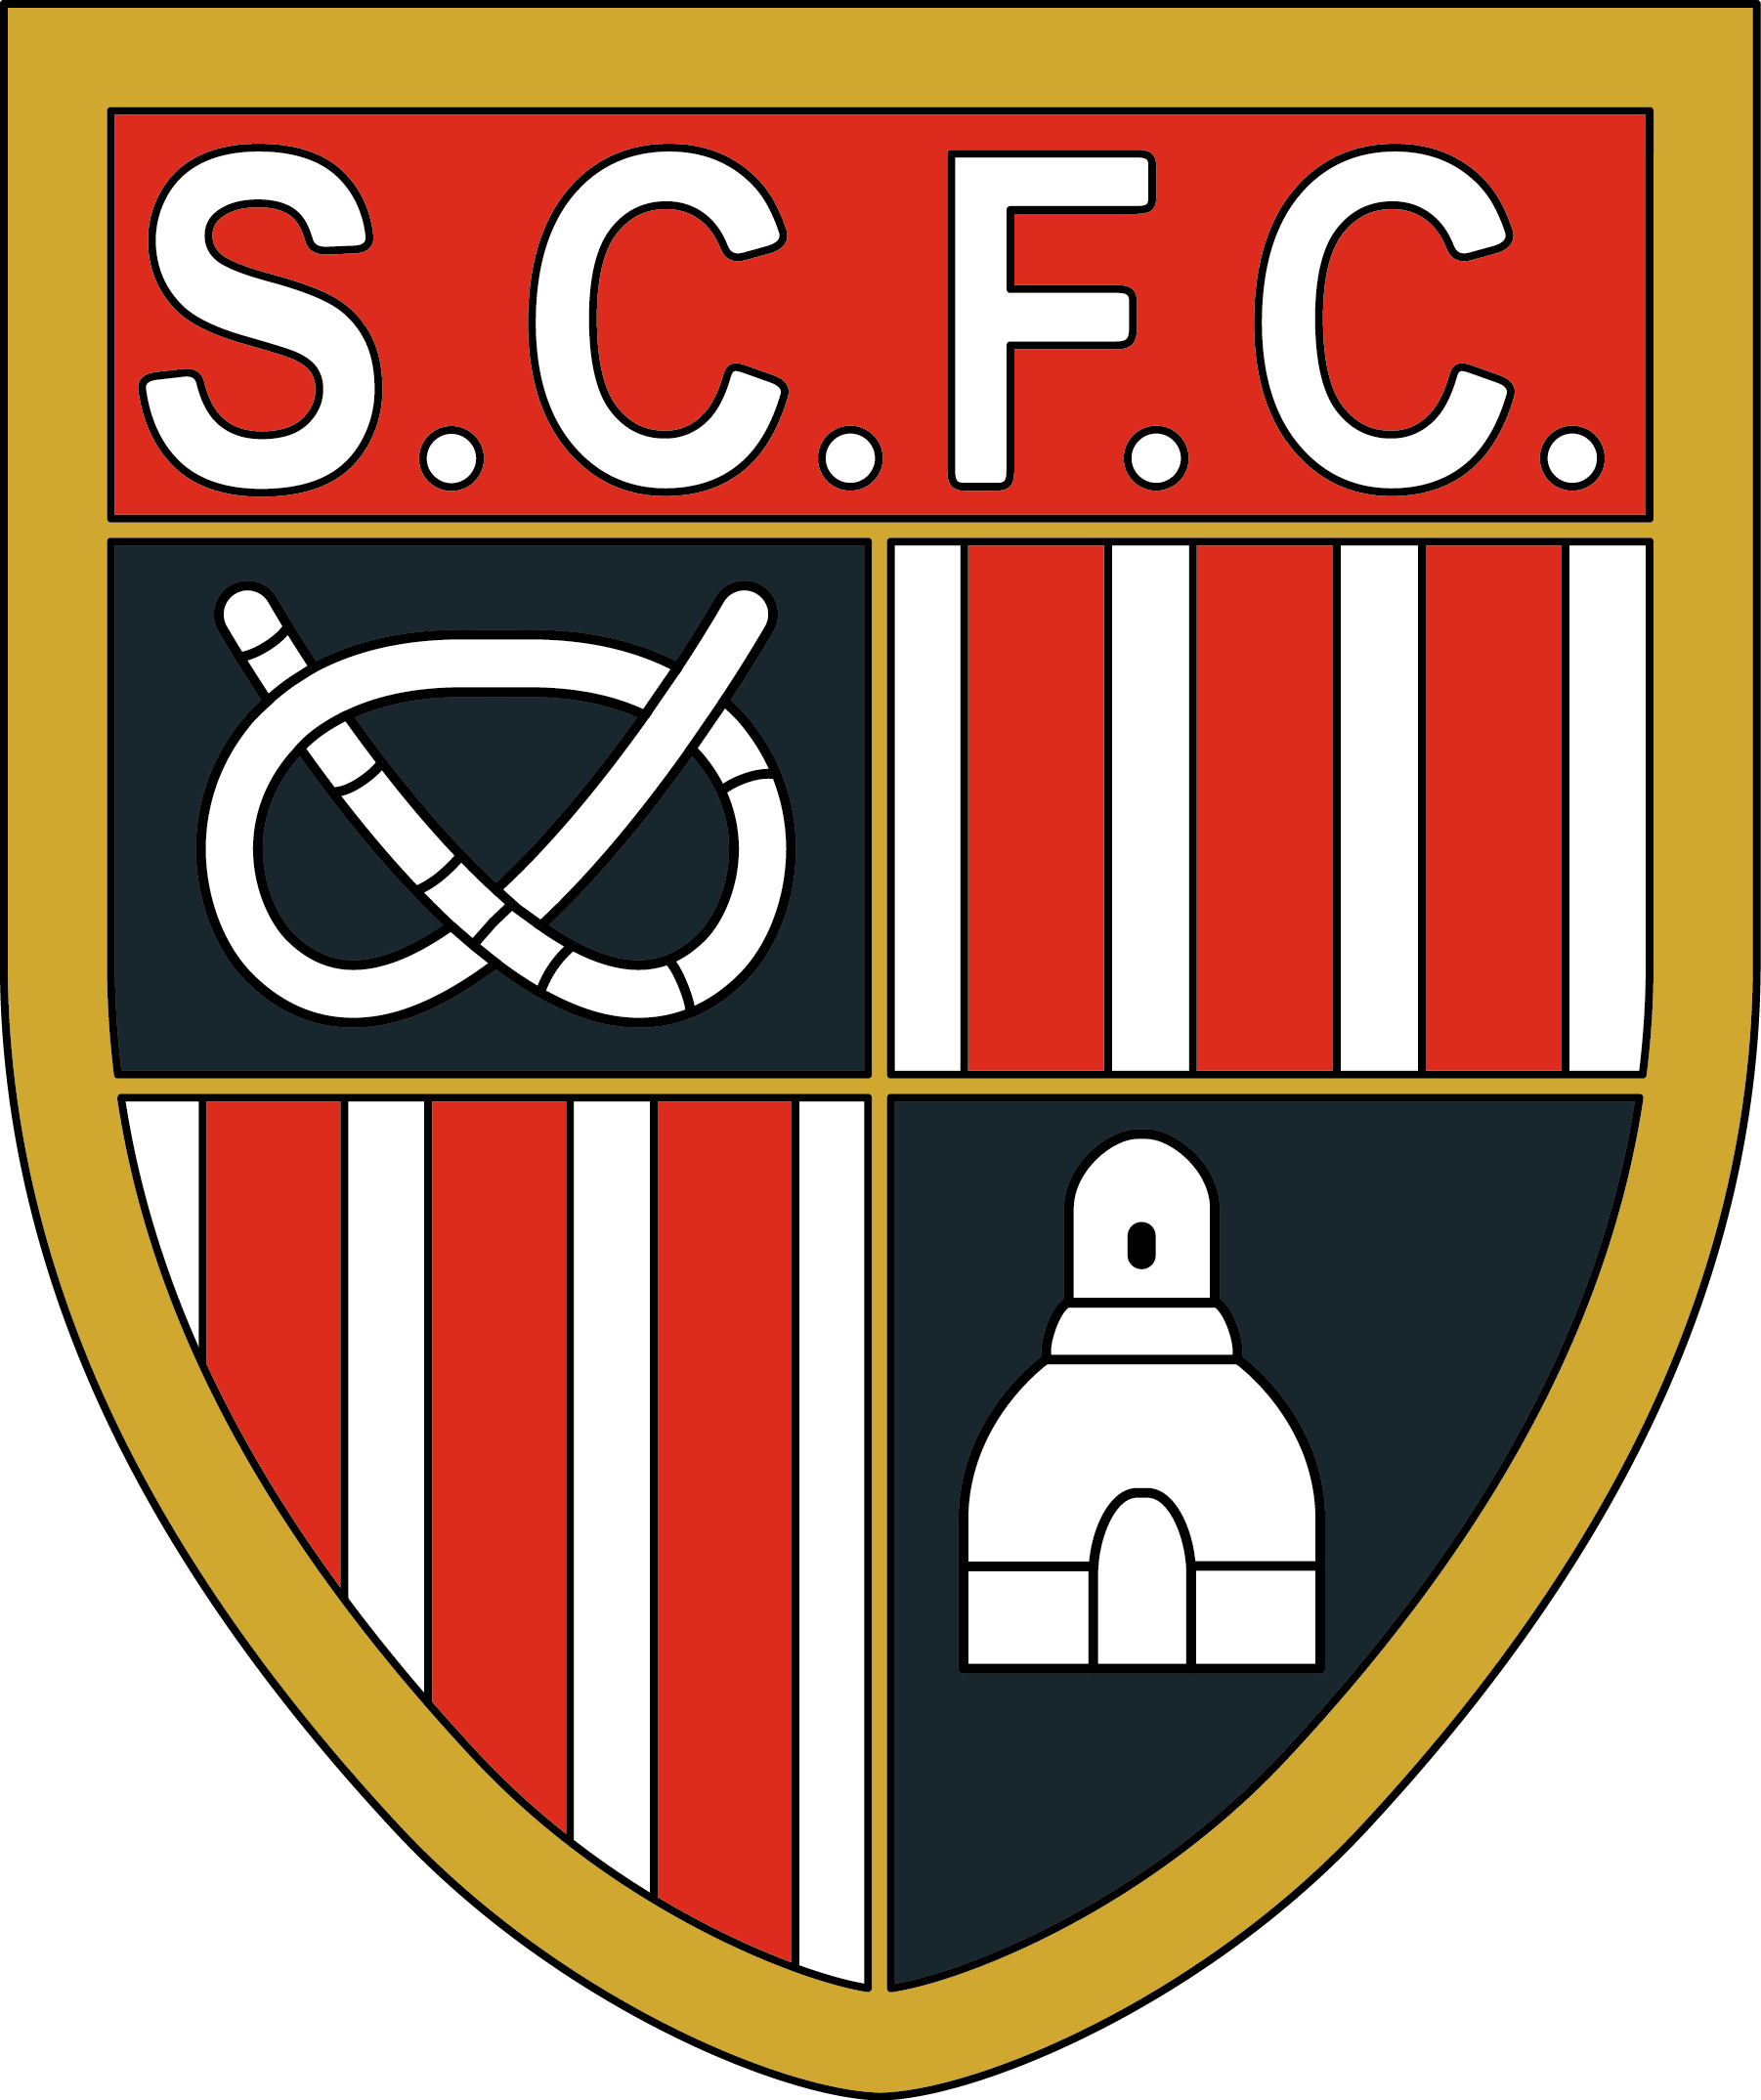 Stoke Logo - Stoke City FC | Emblems of British clubs | Sports clubs, Logos ...